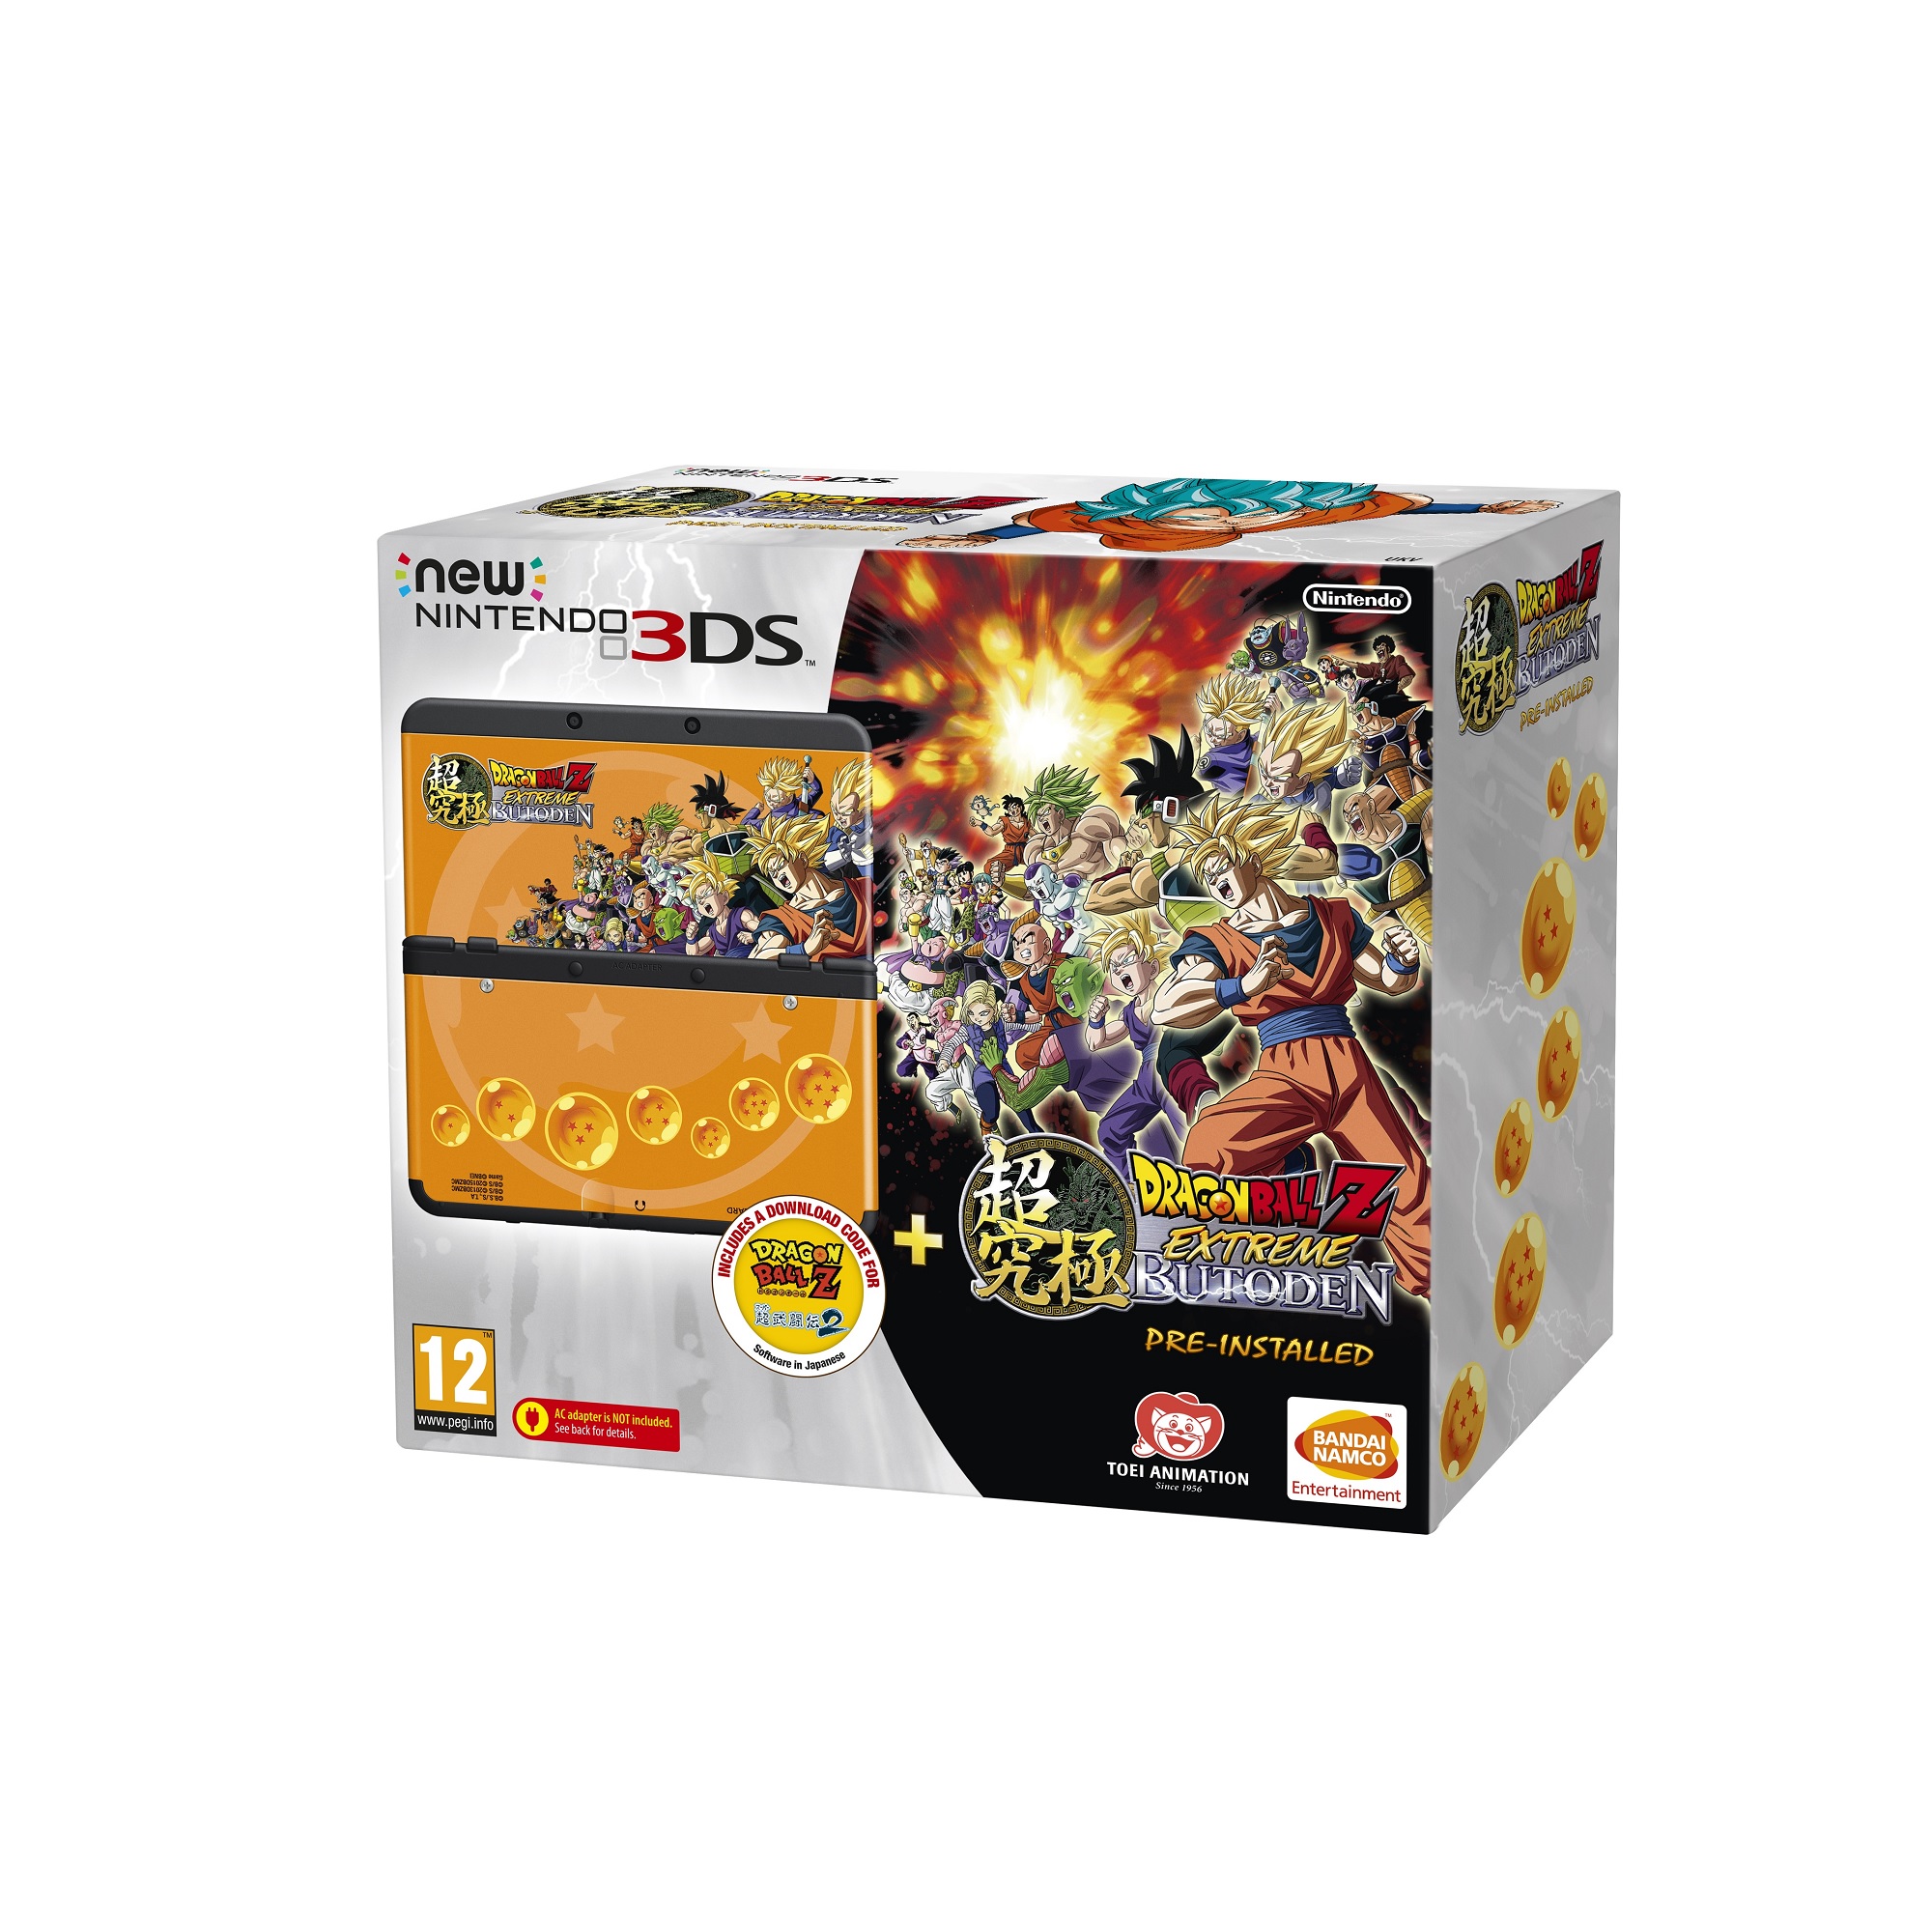 3DS Dragon Ball Z Extreme Butoden. 027fce31b2fa9c5ba7b4193e514d83a6